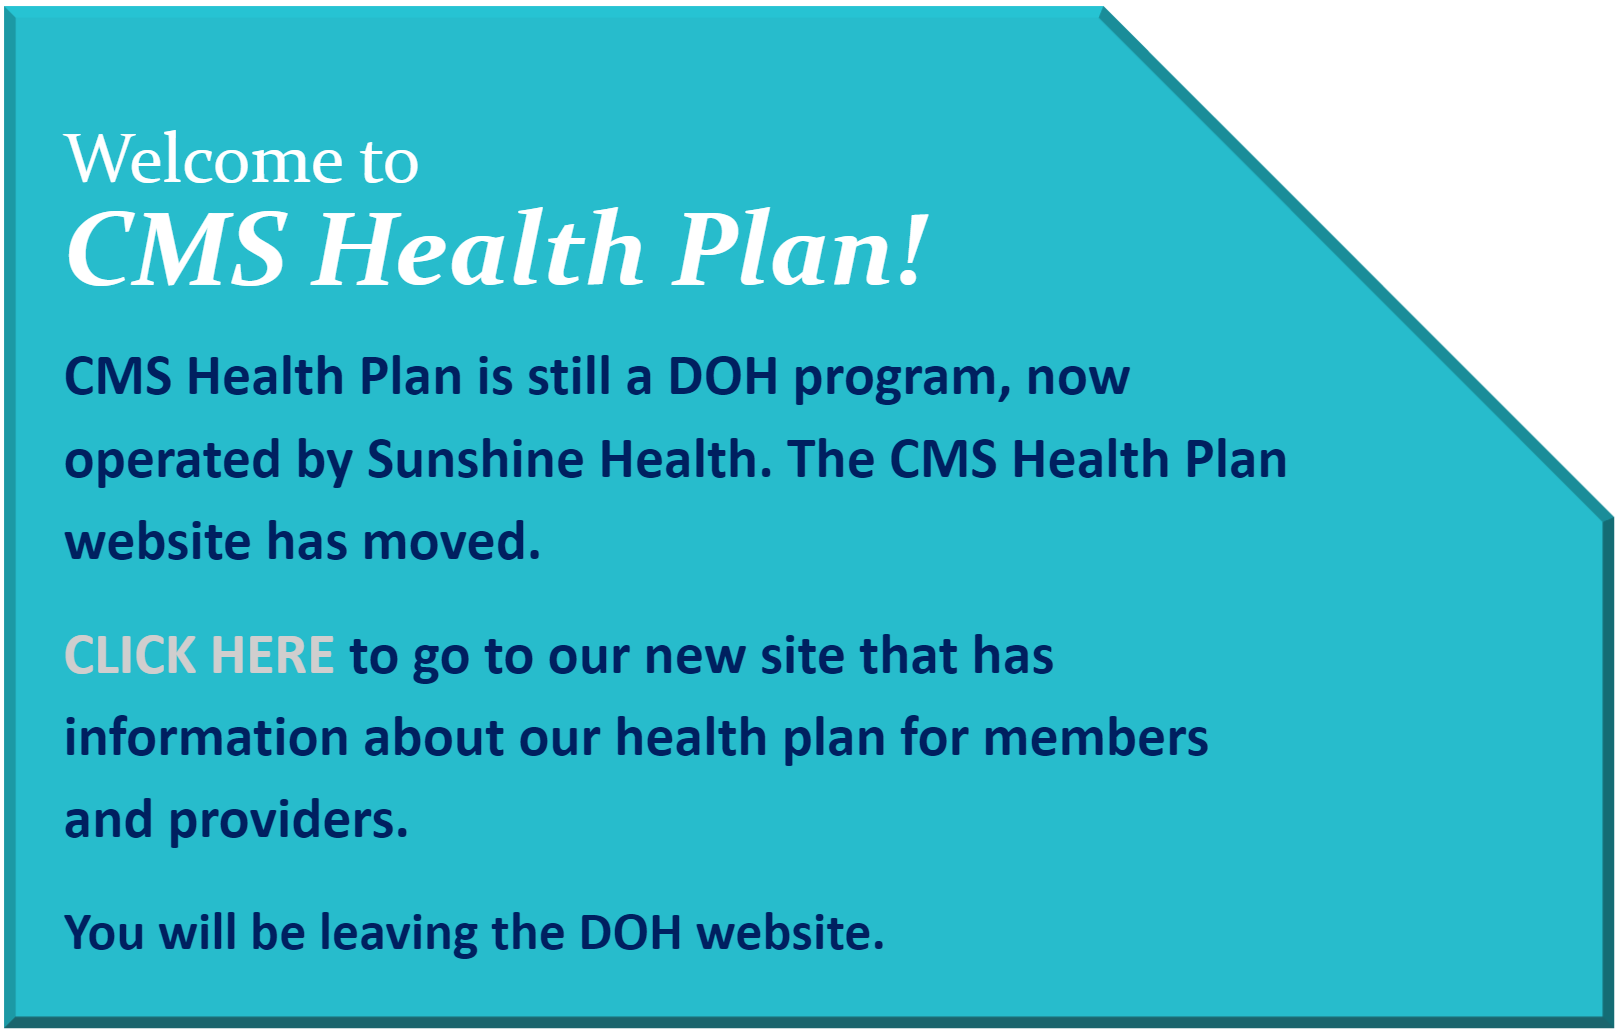 External Link to open up the CMS - Sunshine Health website